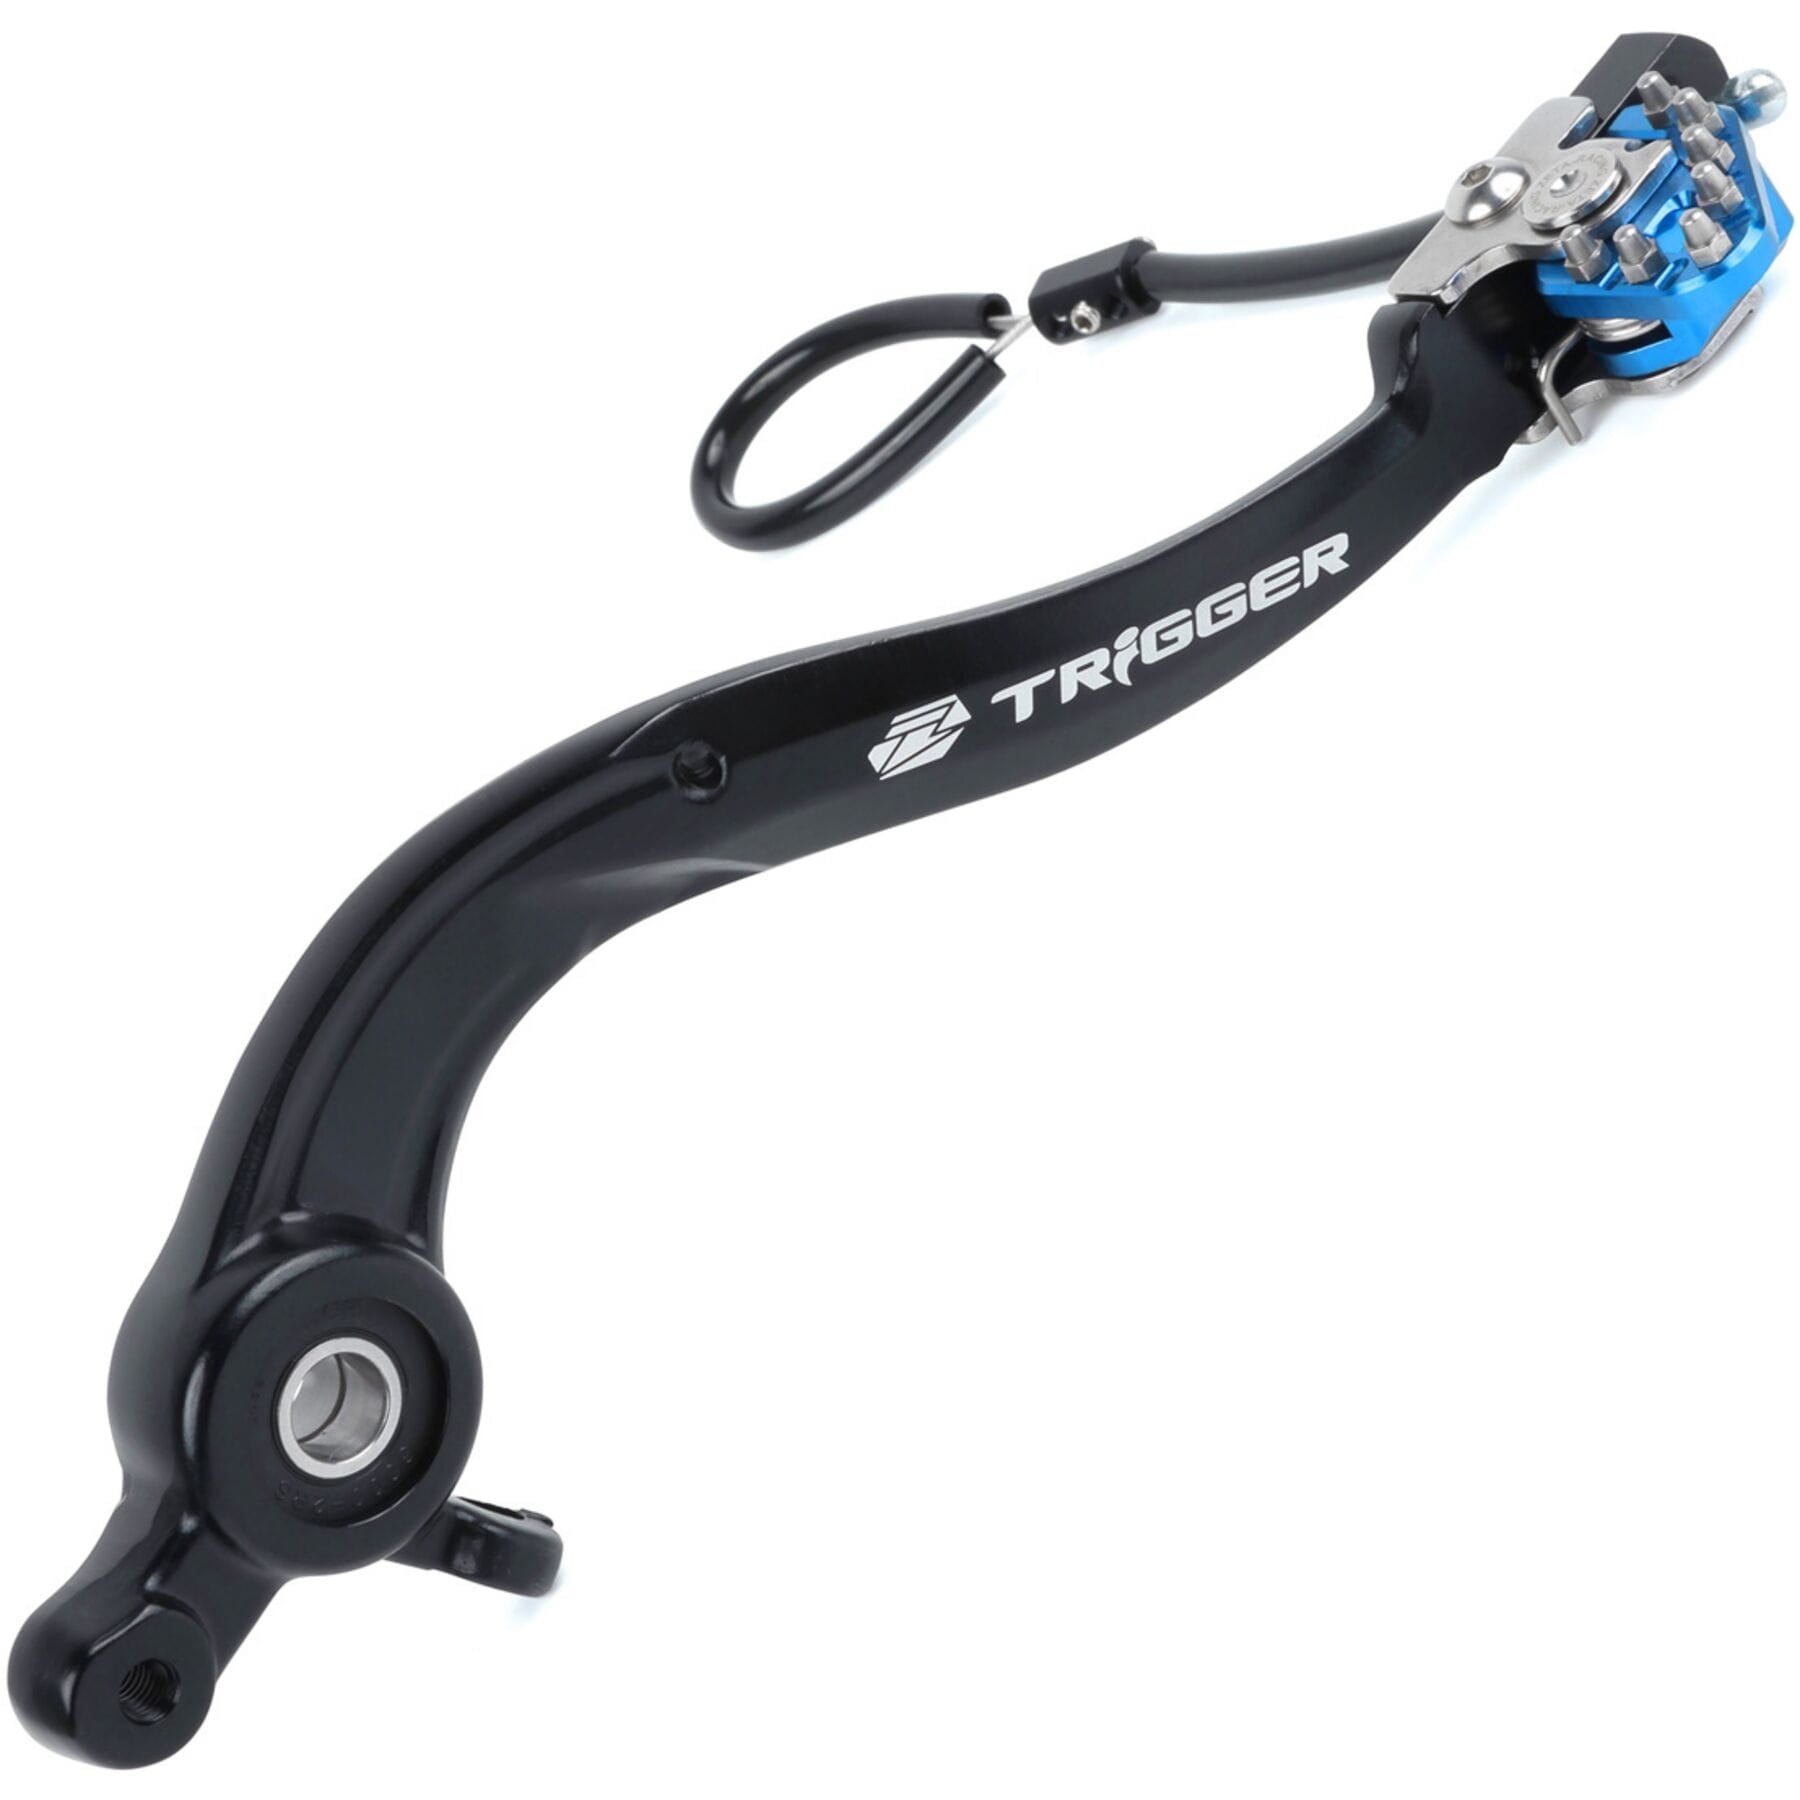 Blue Trigger Rear Brake Pedal Lever for Husky FC 16-22, FE 17-22, 125/150 17-22 models